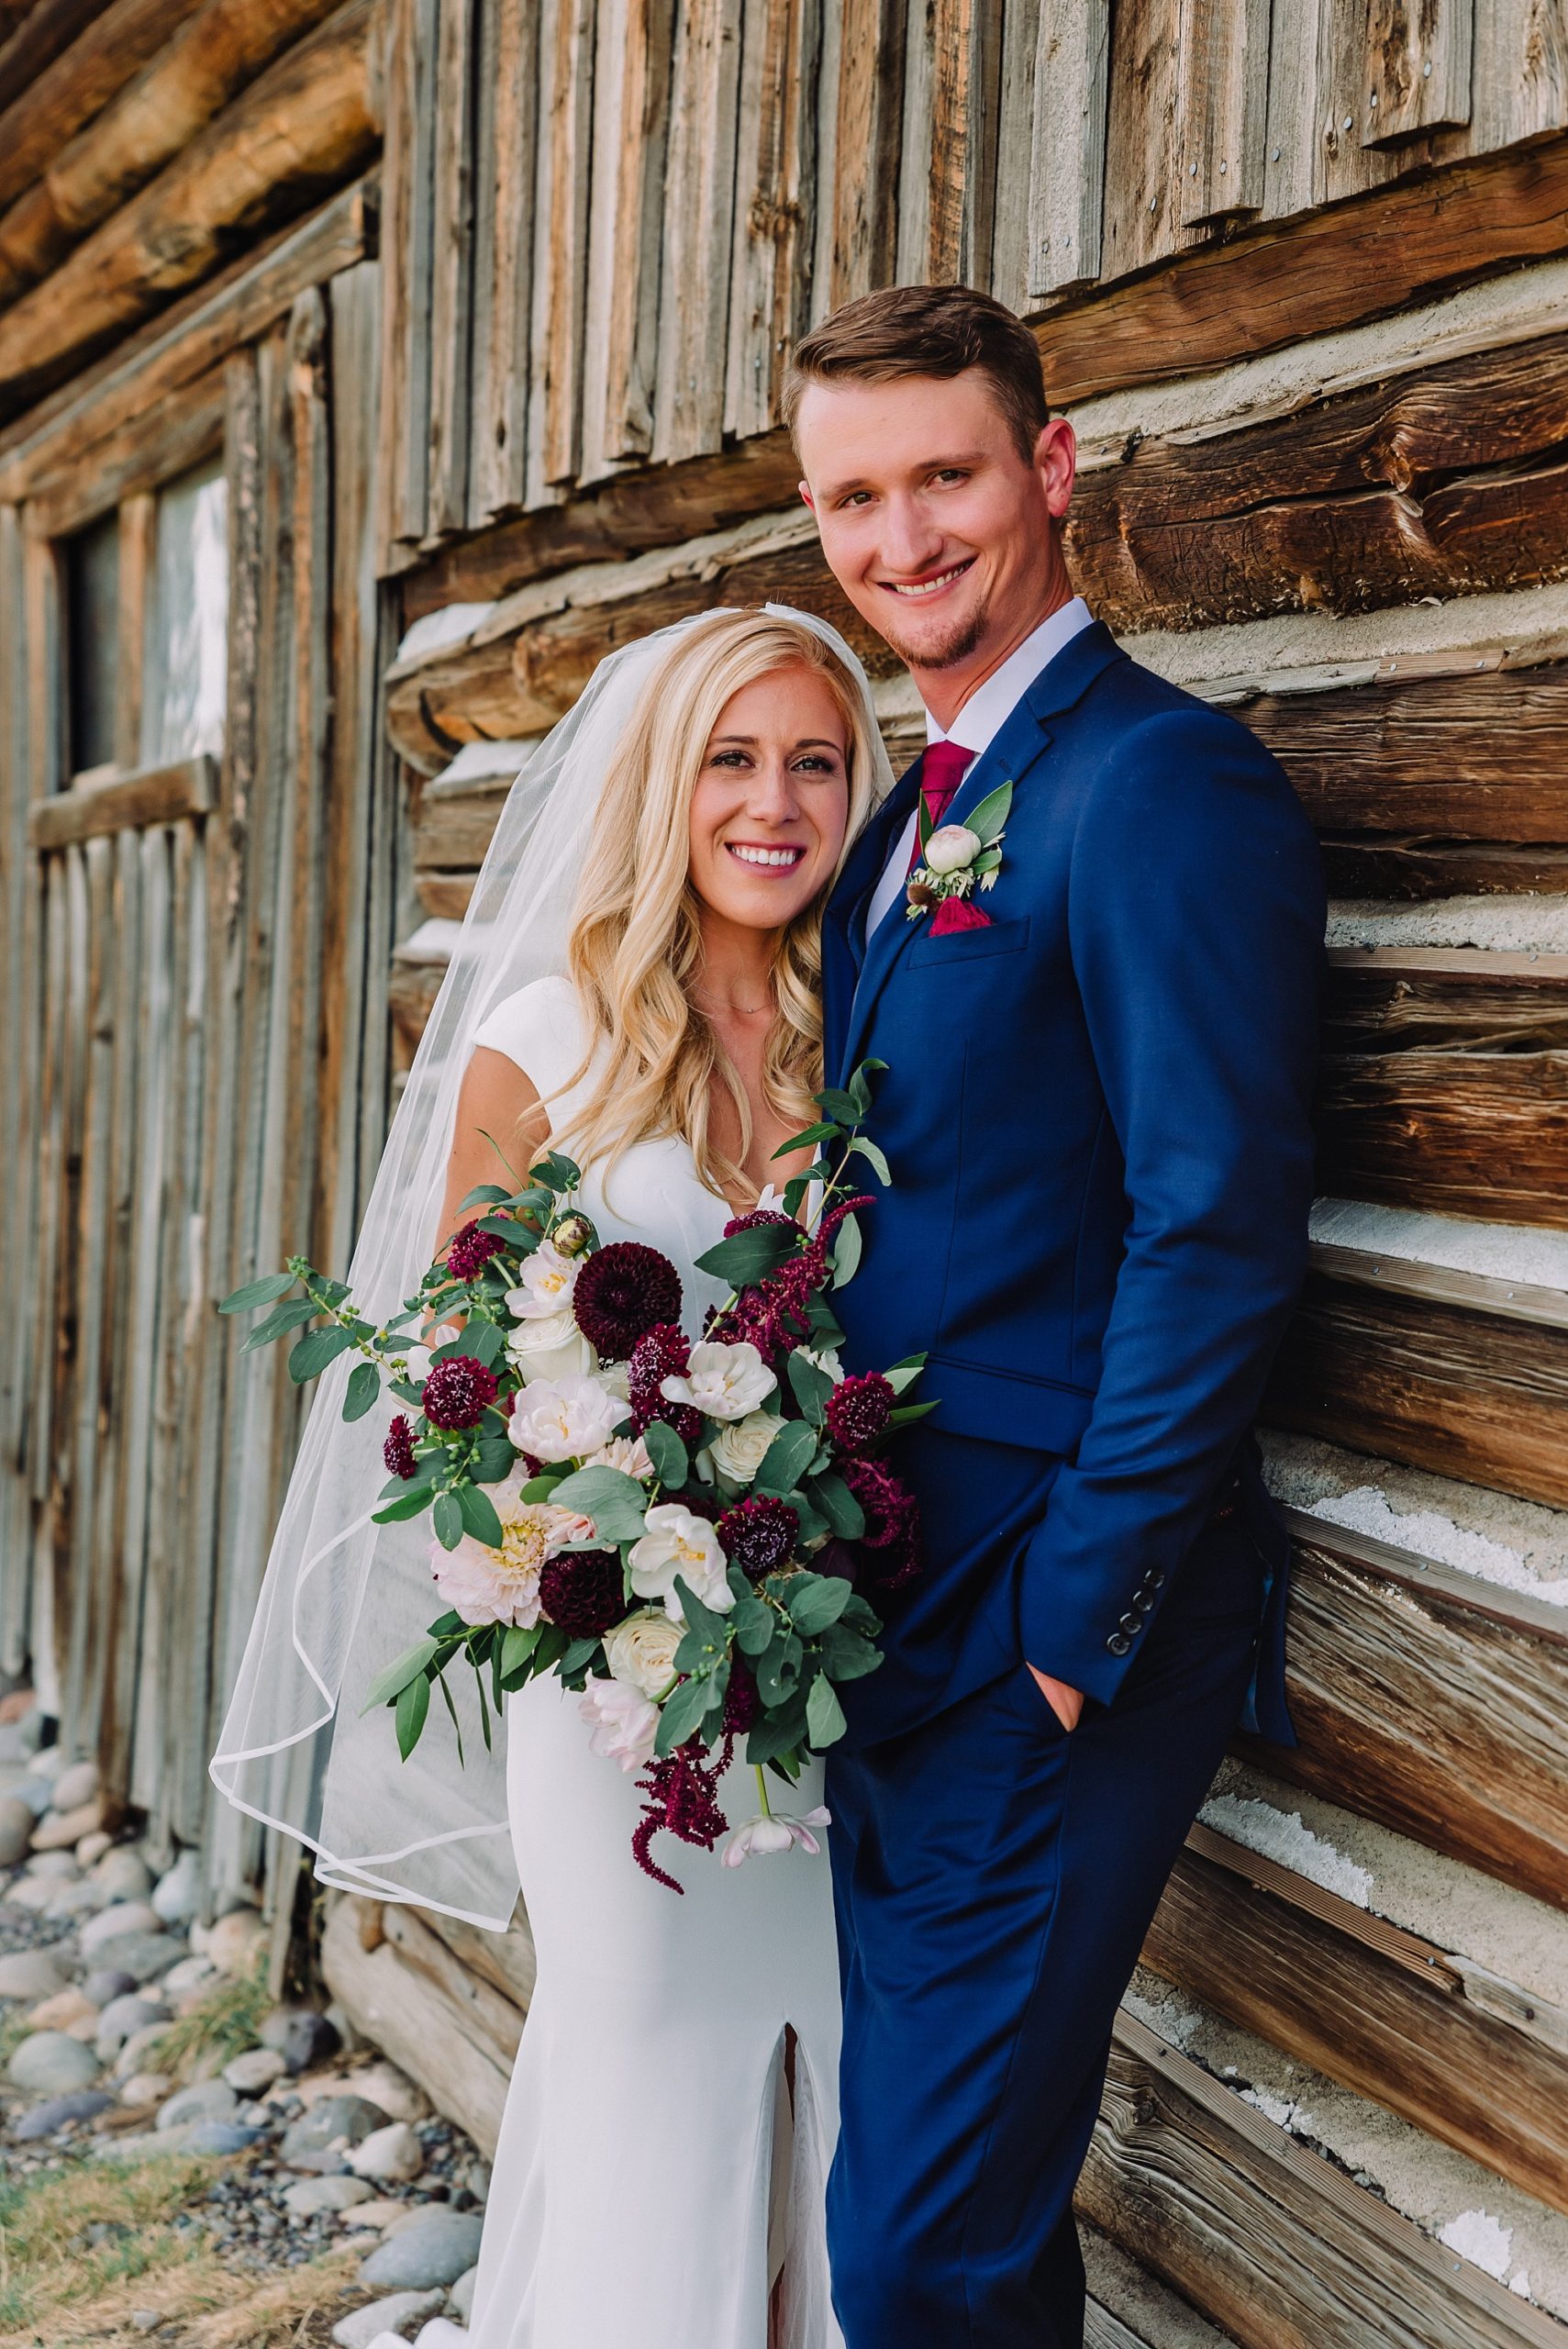 wedding-portraits-at-moulton-barns-on-mormon-row-in-grand-teton-national-park-destination-elopement-romantic-tetons-elope-classic-timeless